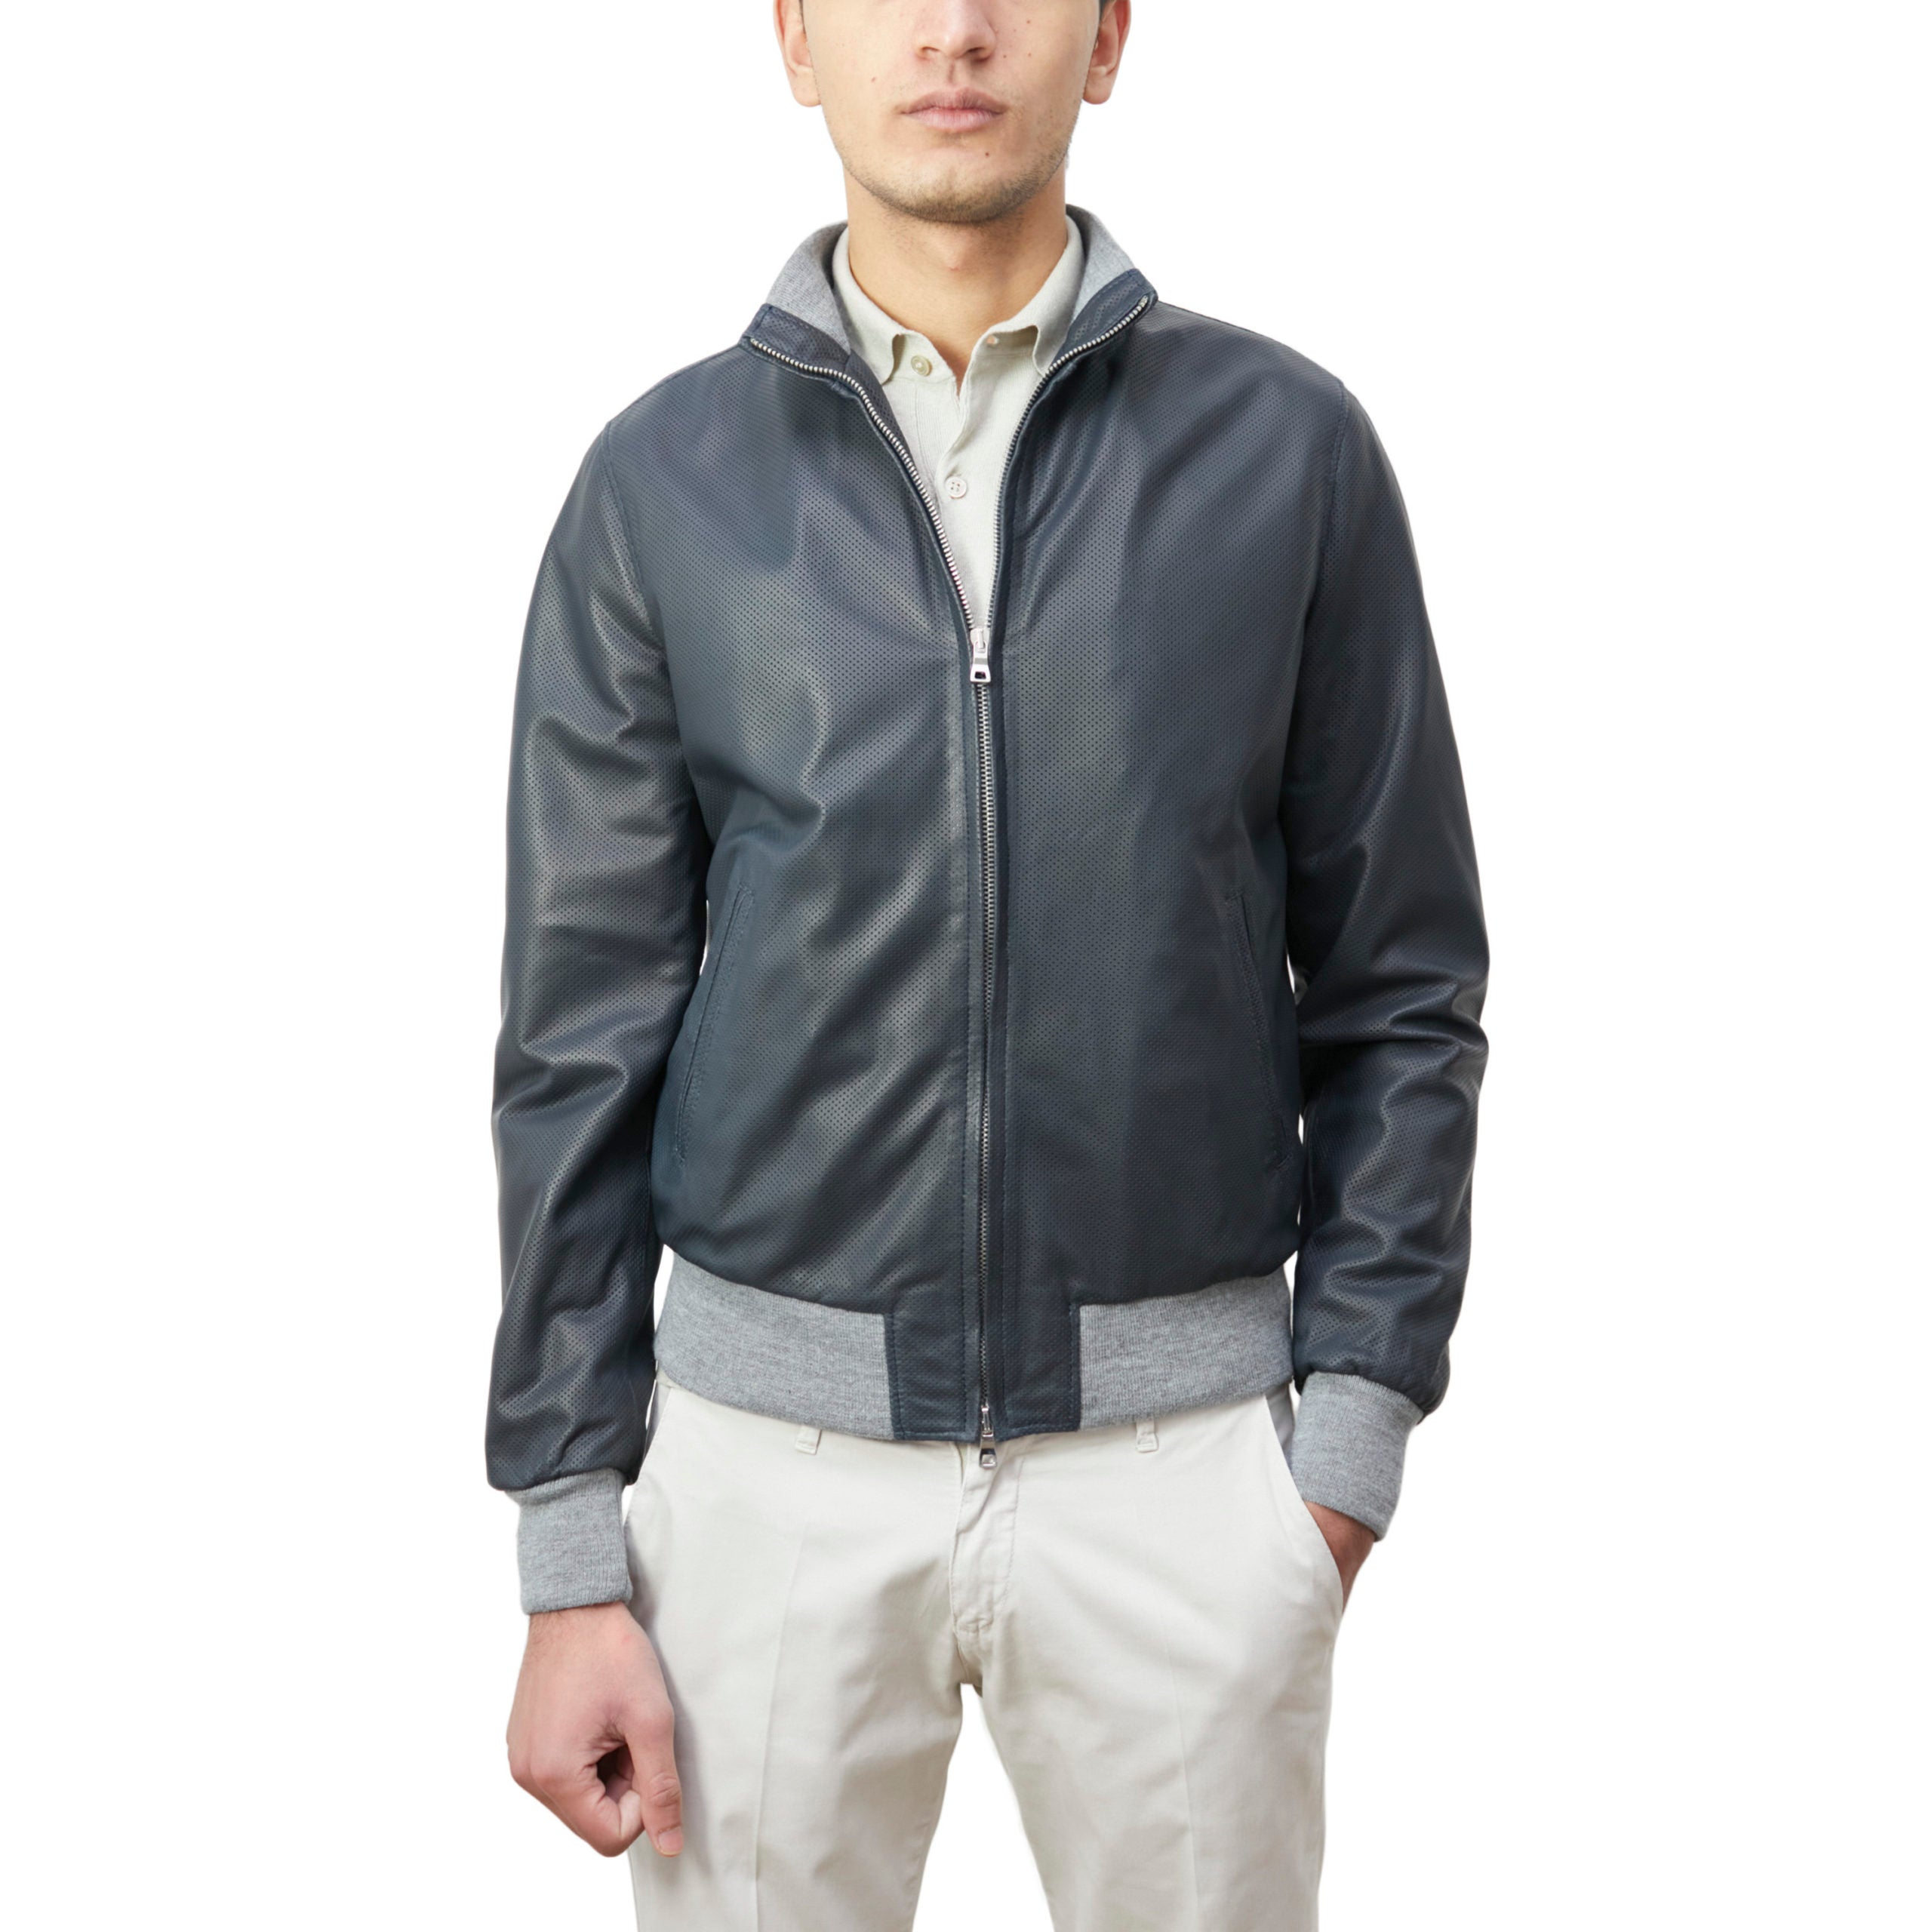 88PNFMA leather jacket